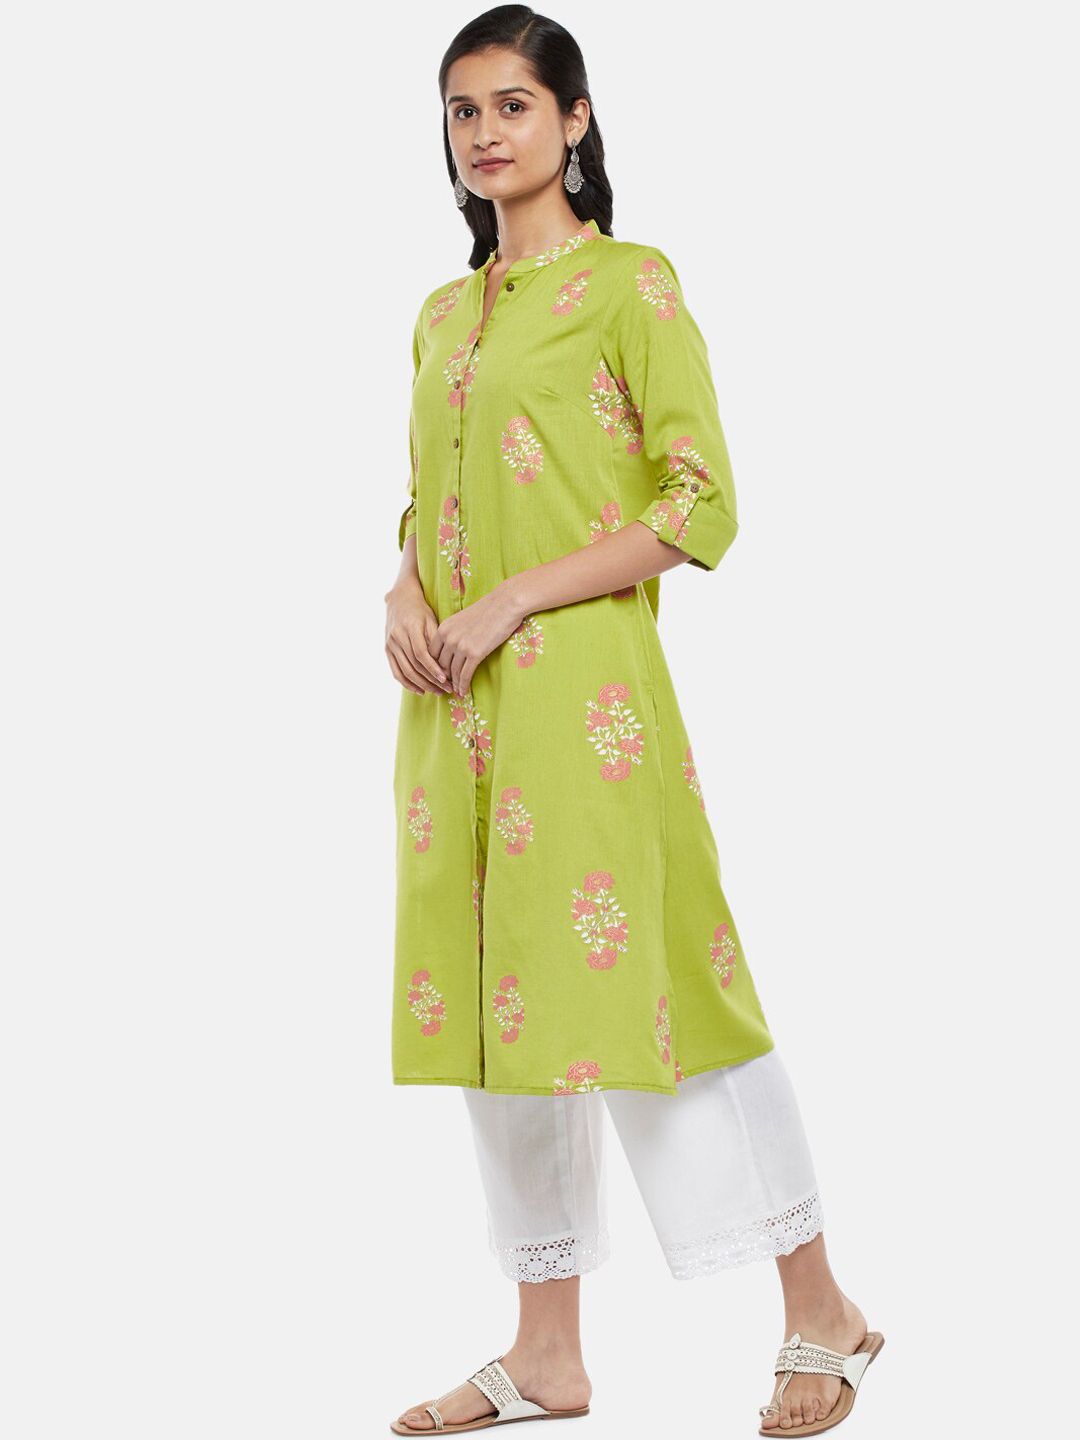 RANGMANCH BY PANTALOONS Women Lime Green & Pink Floral Printed Kurta Price in India